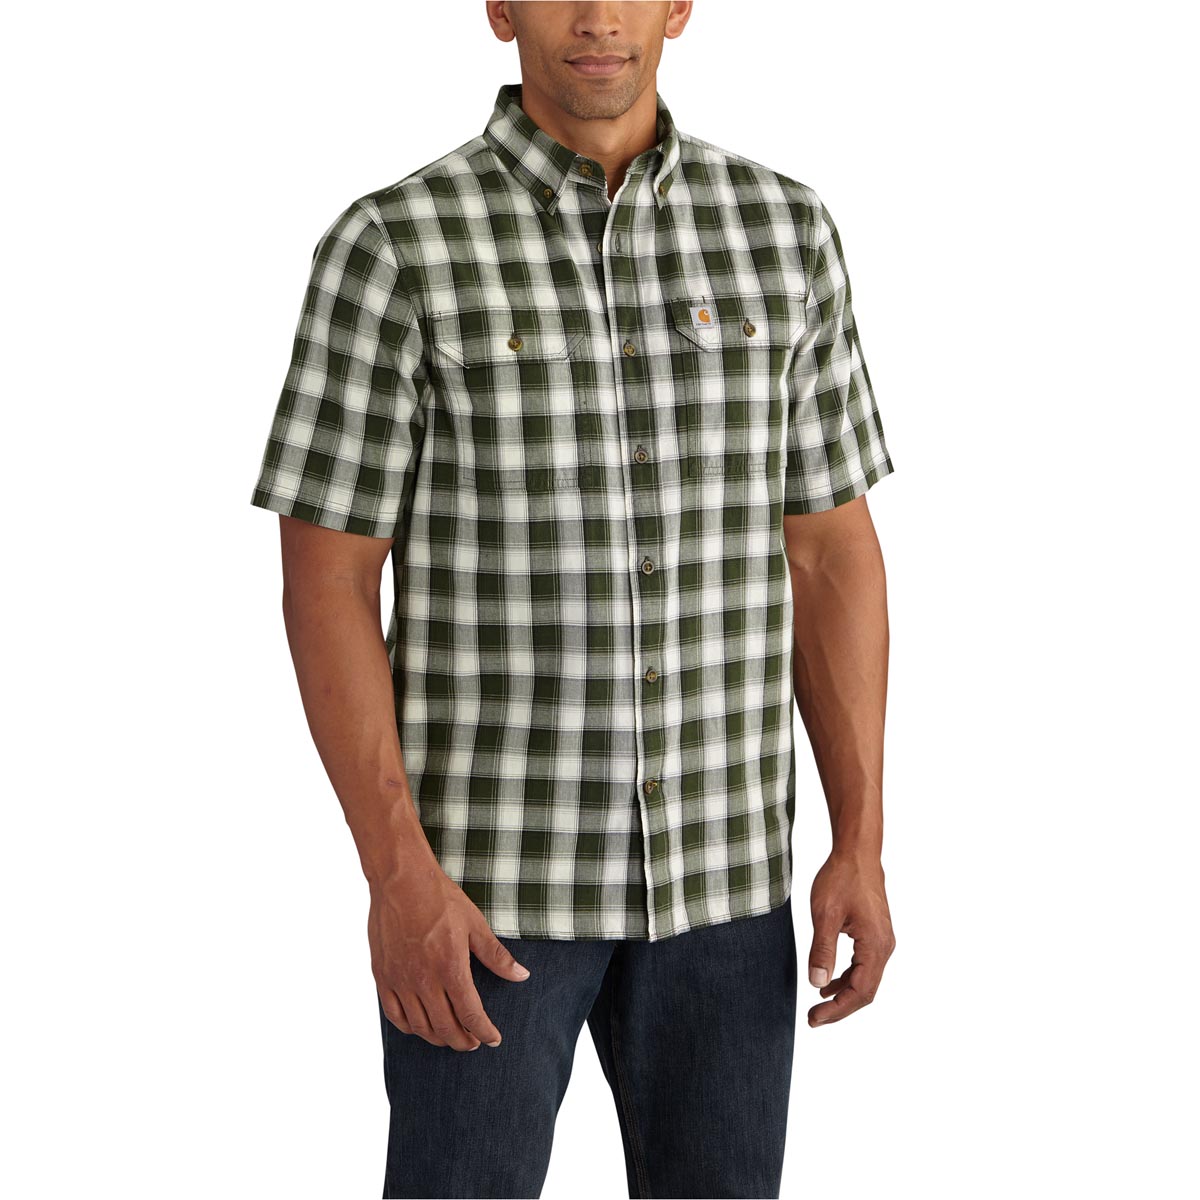 Carhartt Men's Fort Plaid Short Sleeve Shirt